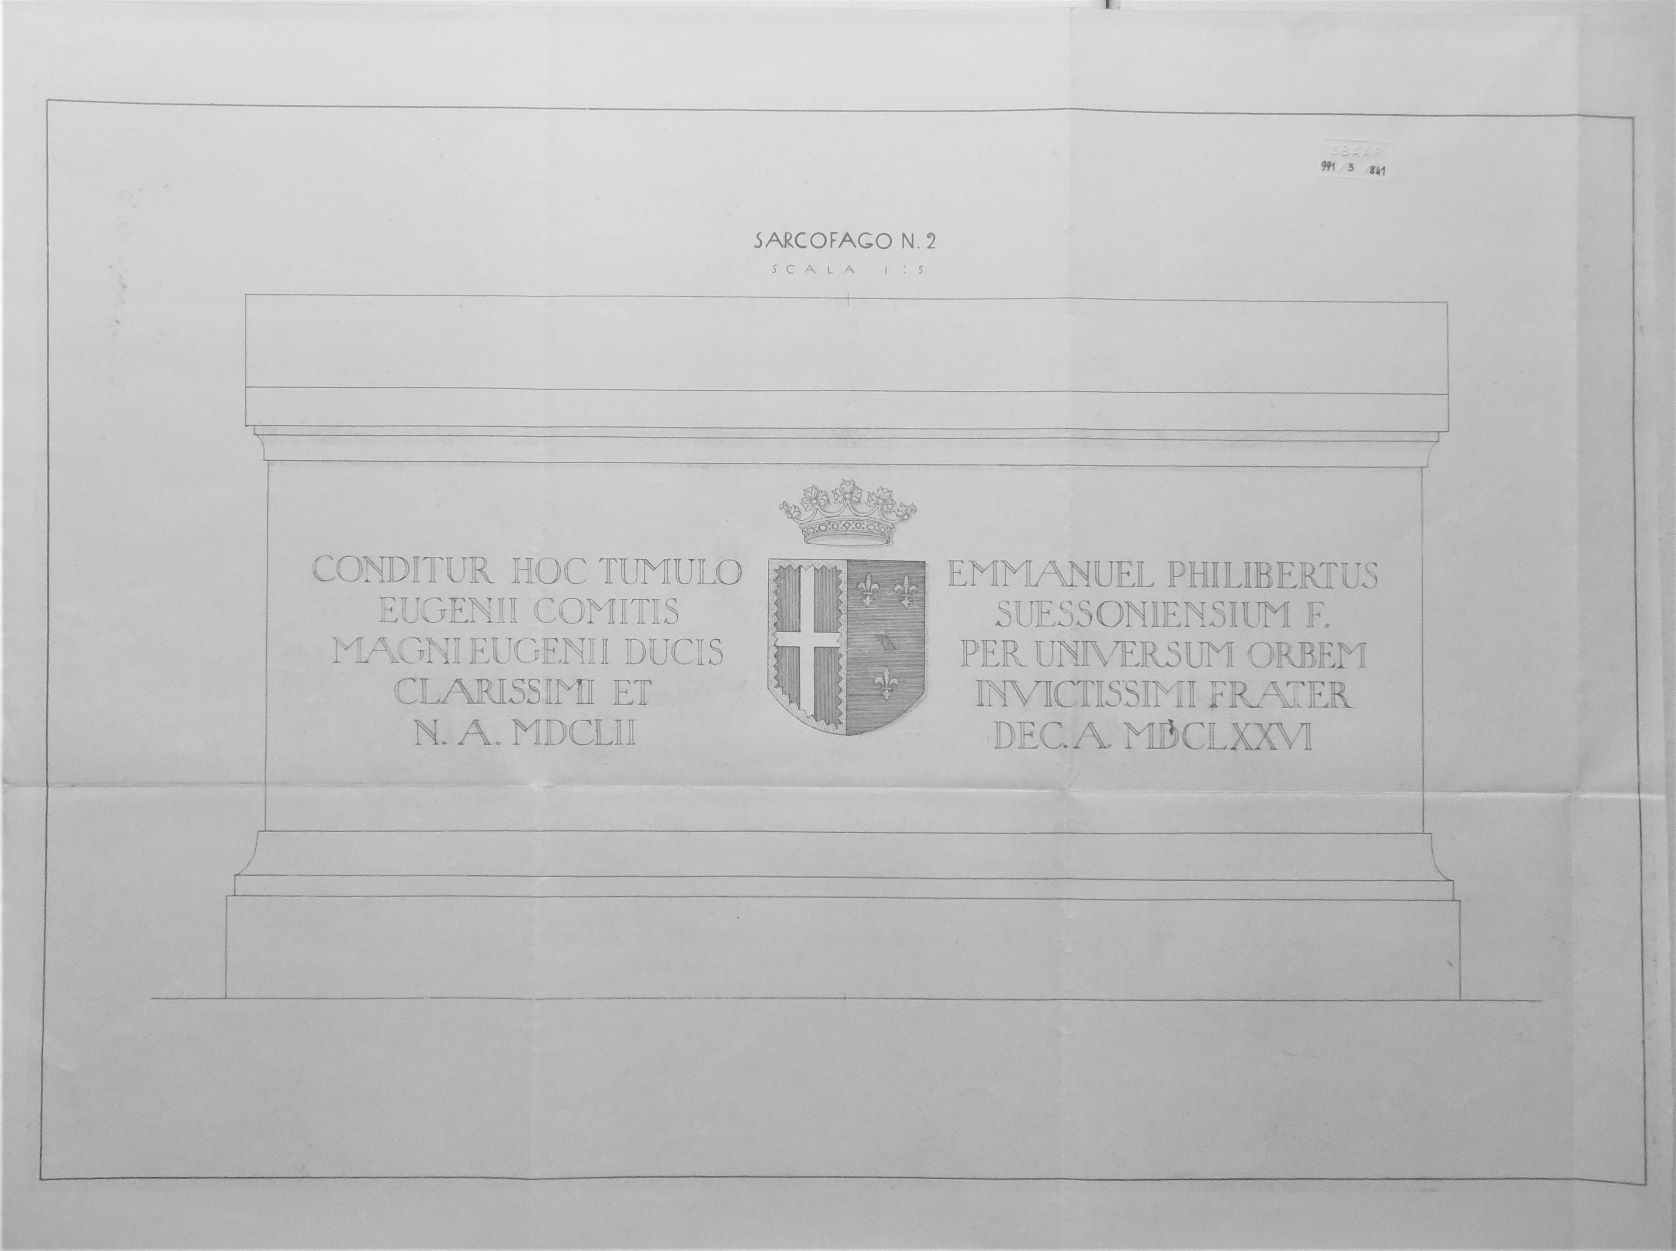 Sacra di San Michele/ Sarcofago n. 2 - scala 1:5, Sacra di San Michele a Sant'Ambrogio di Susa (TO) - Sarcofago n. 2 - scala 1:5 (disegno) di Chierici Umberto (cerchia) (secondo quarto sec. XX)